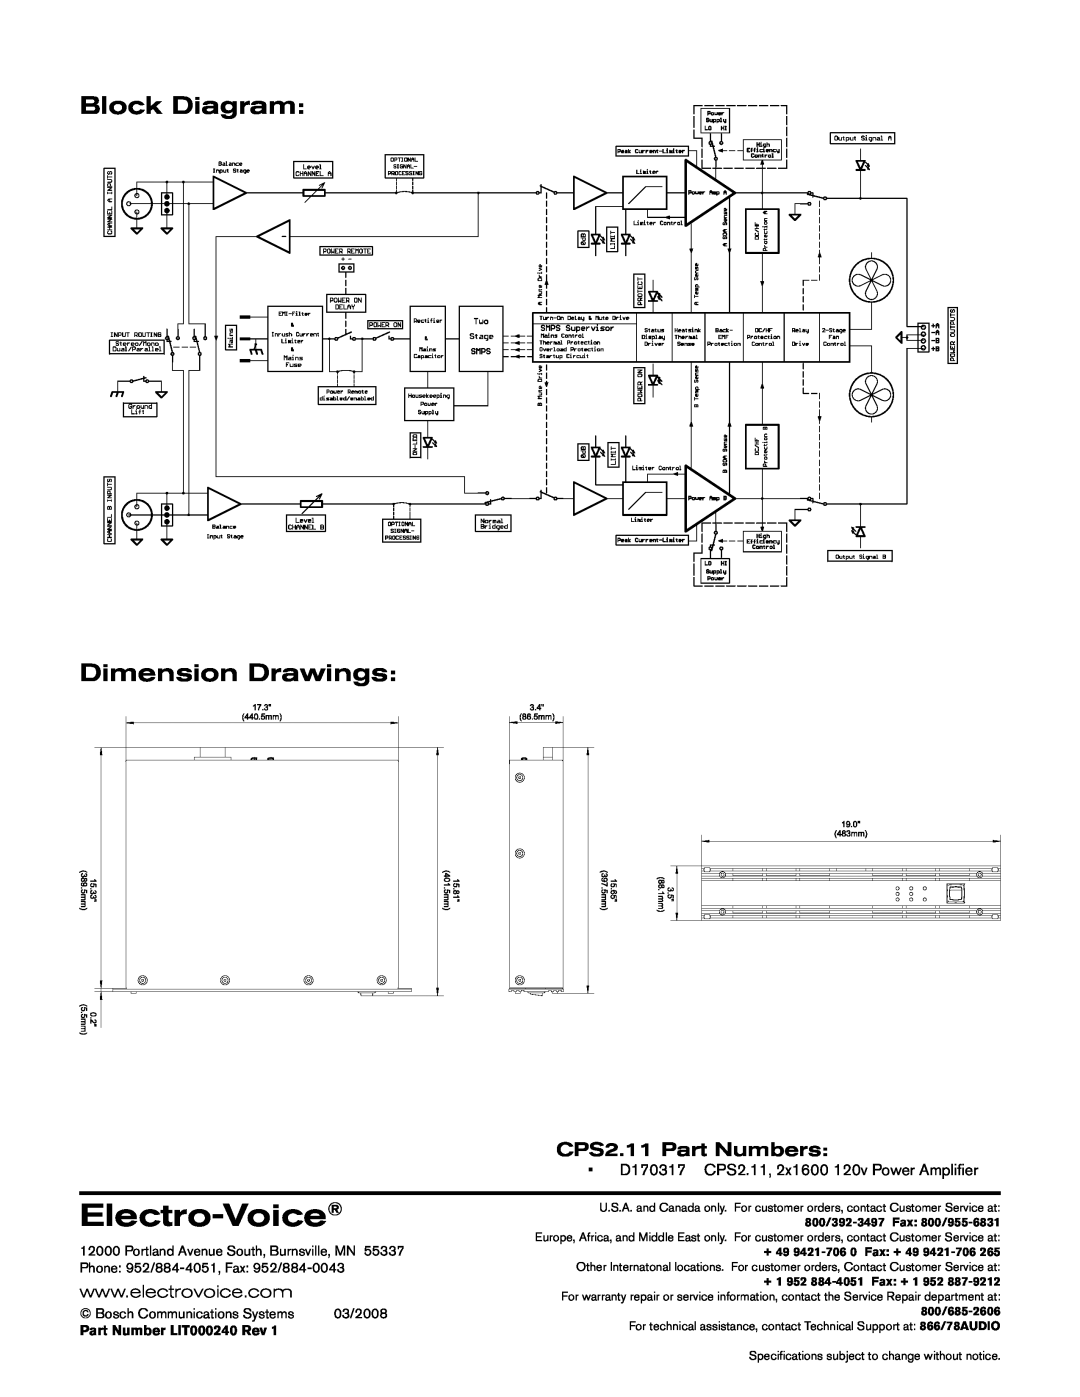 Electro-Voice Block Diagram Dimension Drawings, CPS2.11 Part Numbers, Electro-Voice, Part Number LIT000240 Rev 